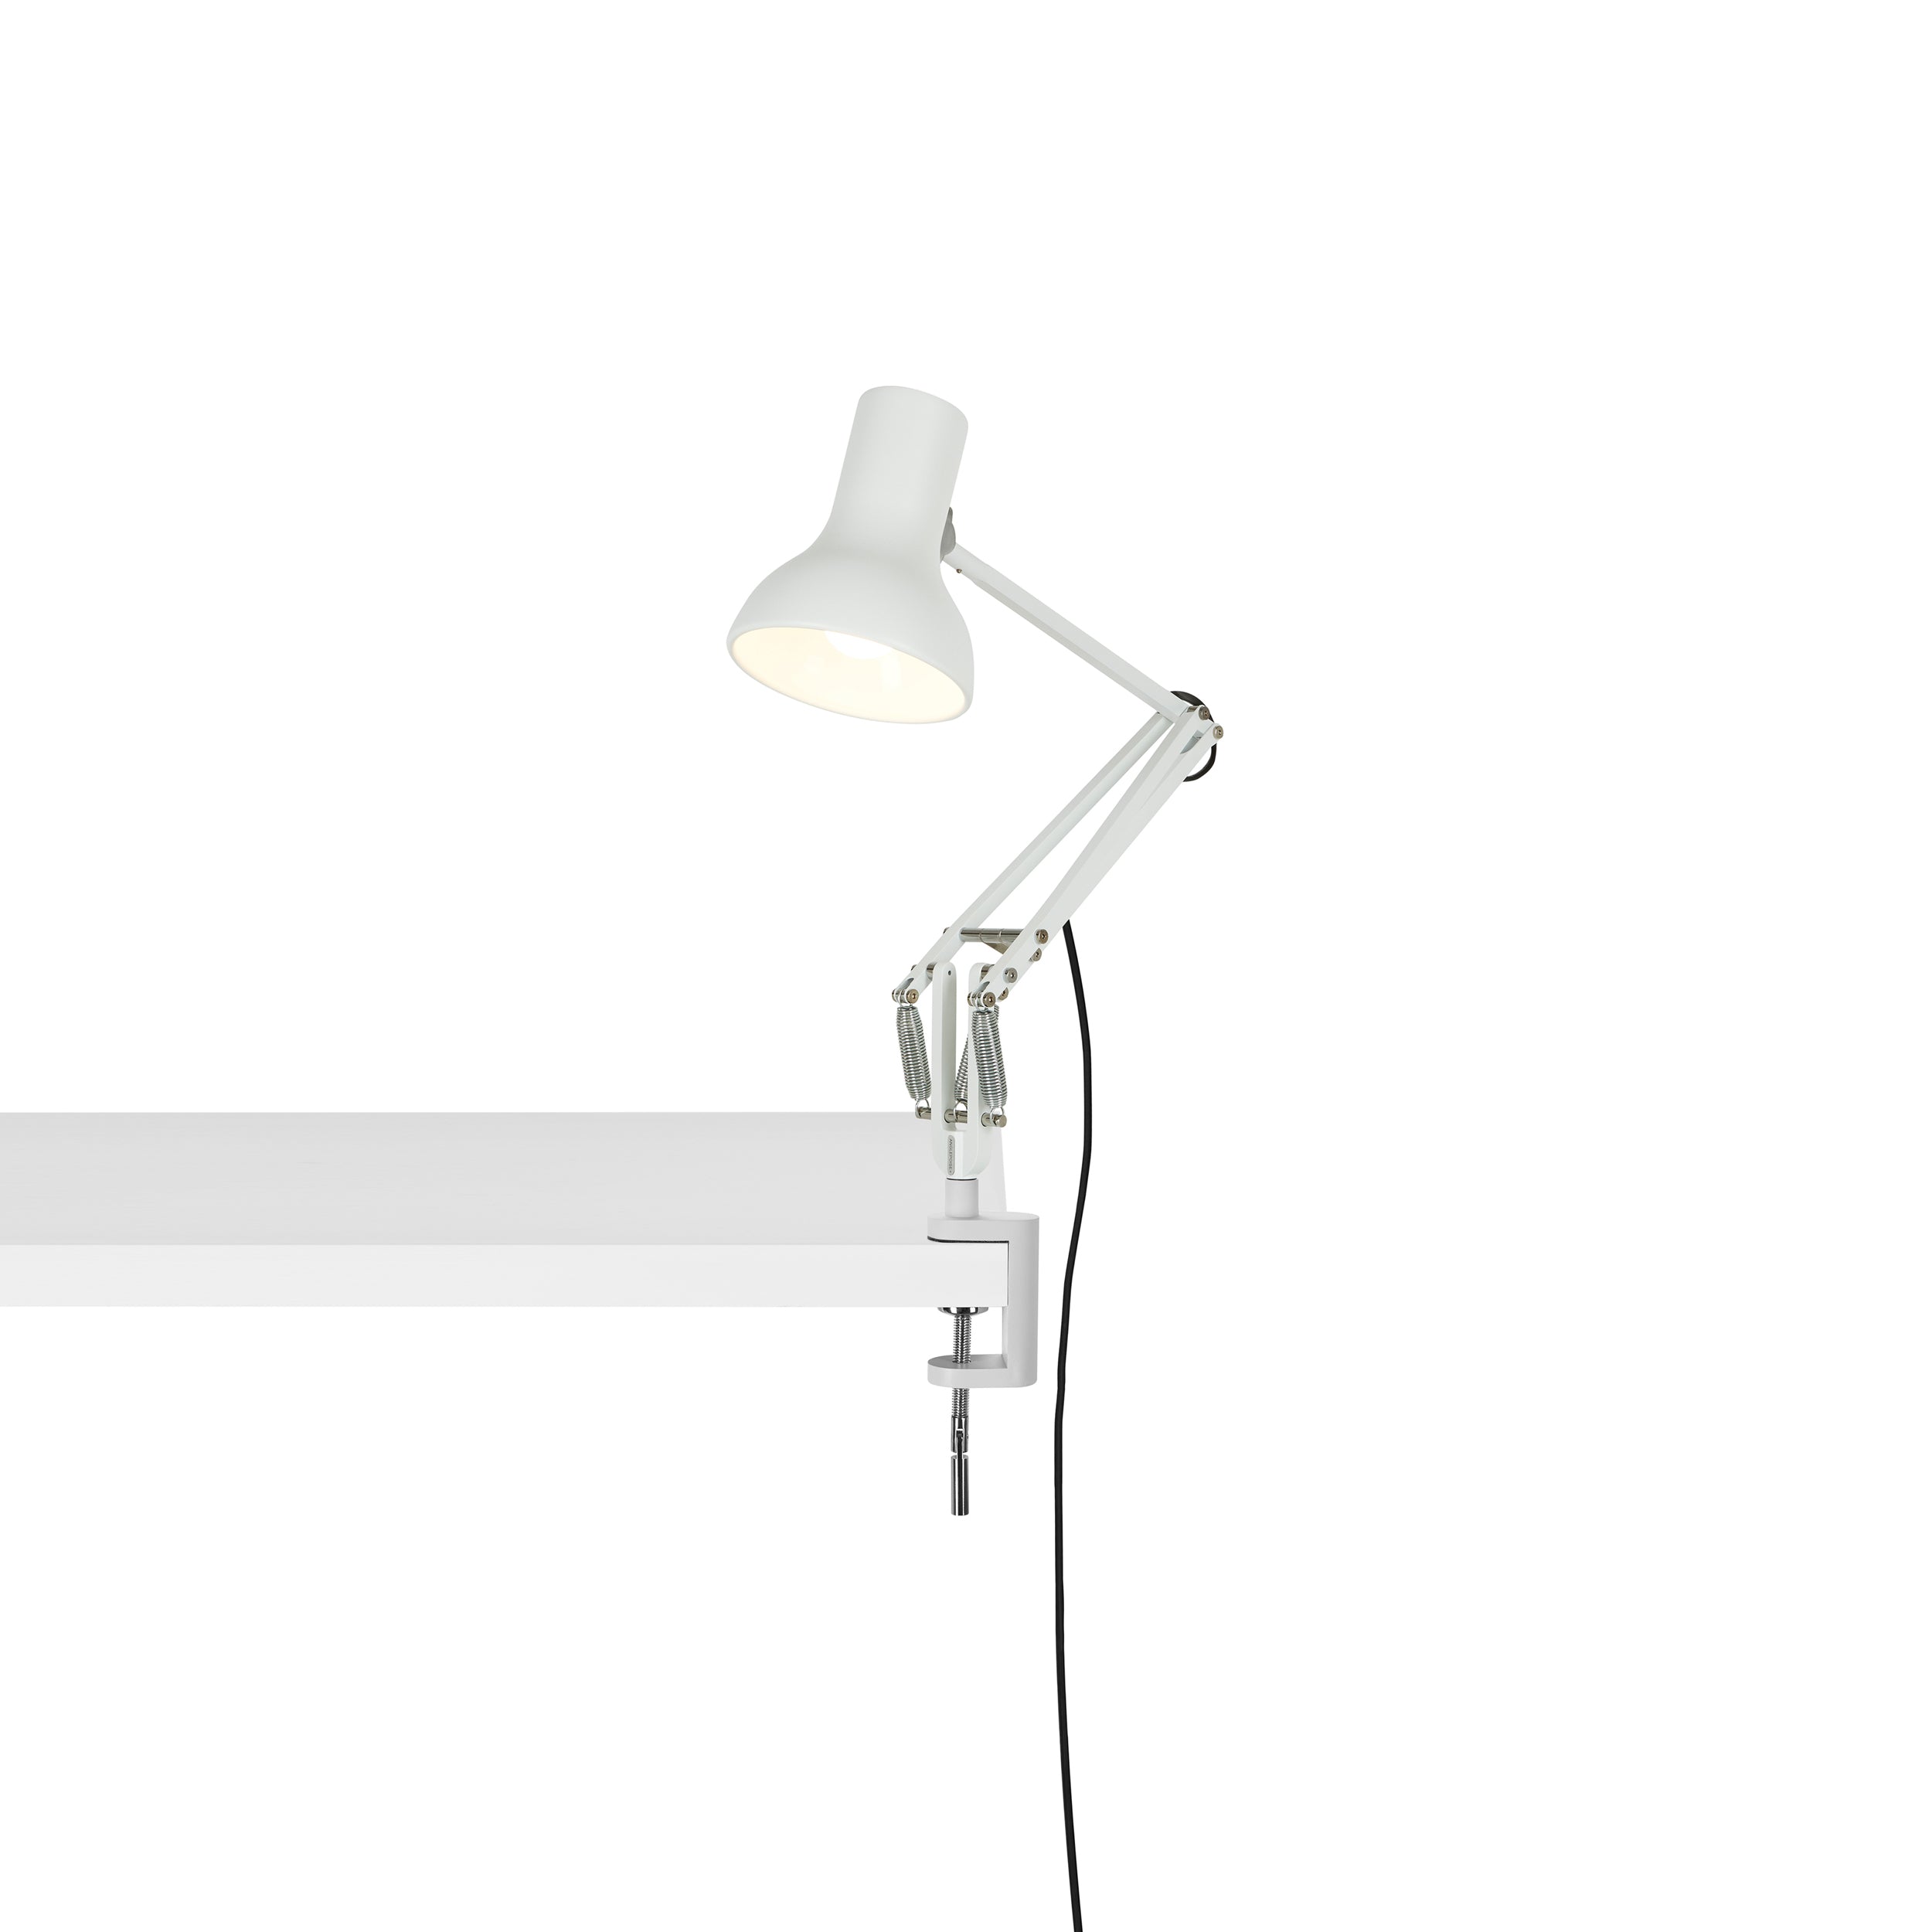 Type 75 Mini Desk Lamp with Clamp: Alpine White